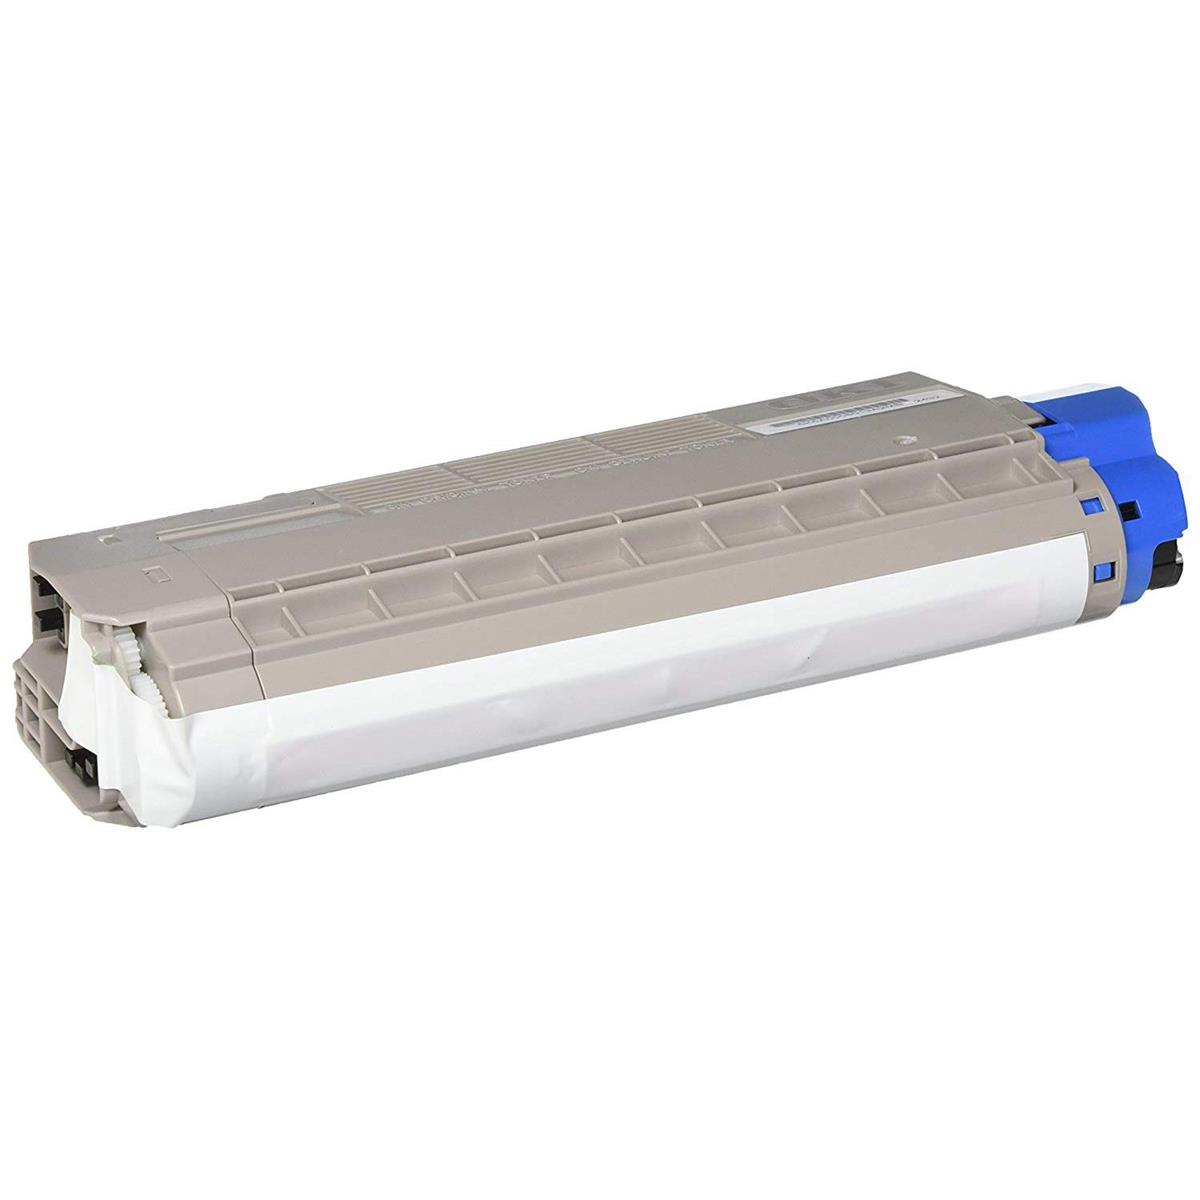 Type C11 Laser Toner Cartridge for CX2033 MFP Printers, Black - OKI Data 43865768